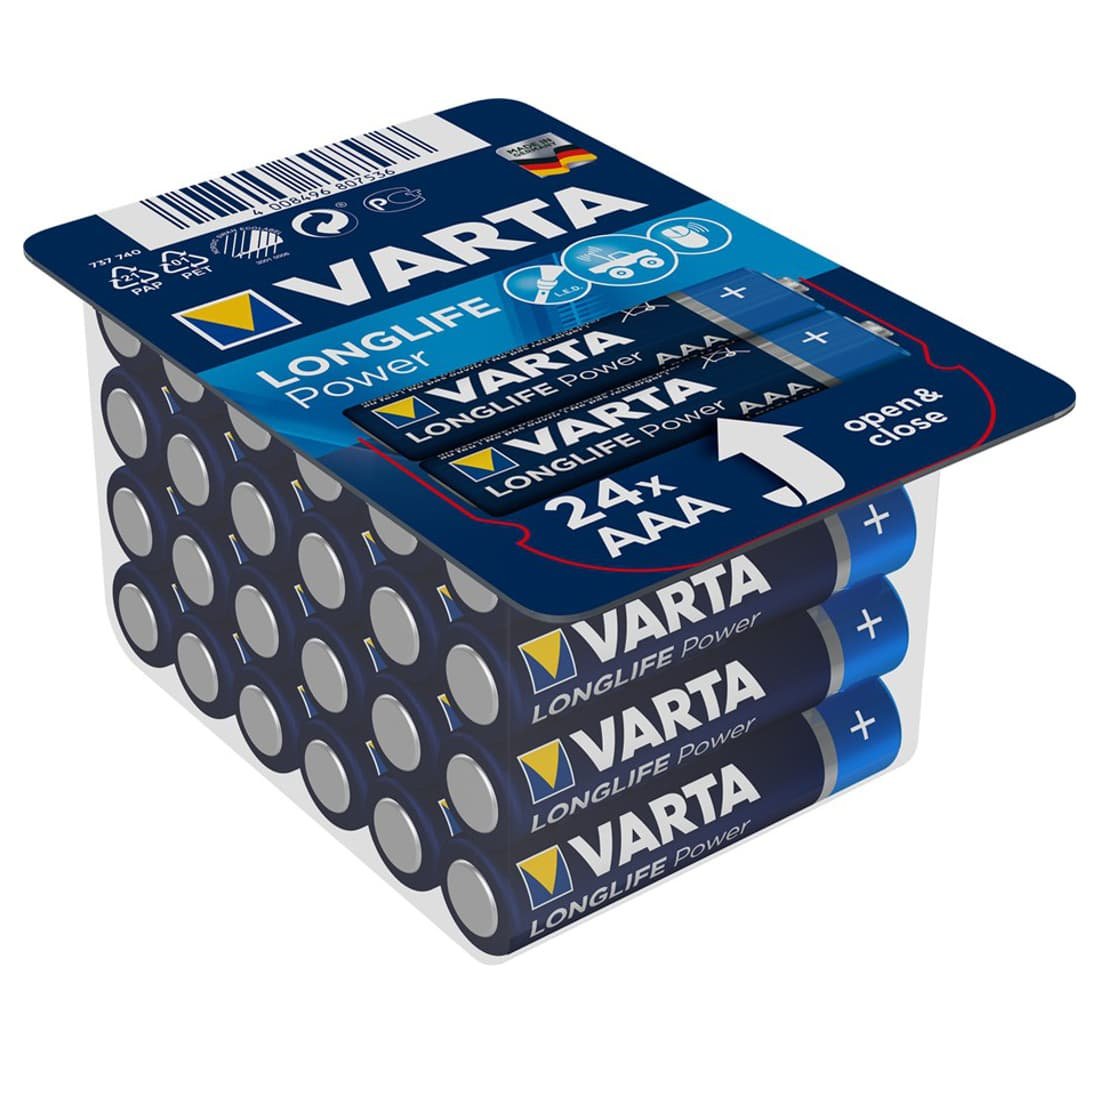 Se Varta Longlife Power AAA Batterier - 24 stk hos PlusLED.dk